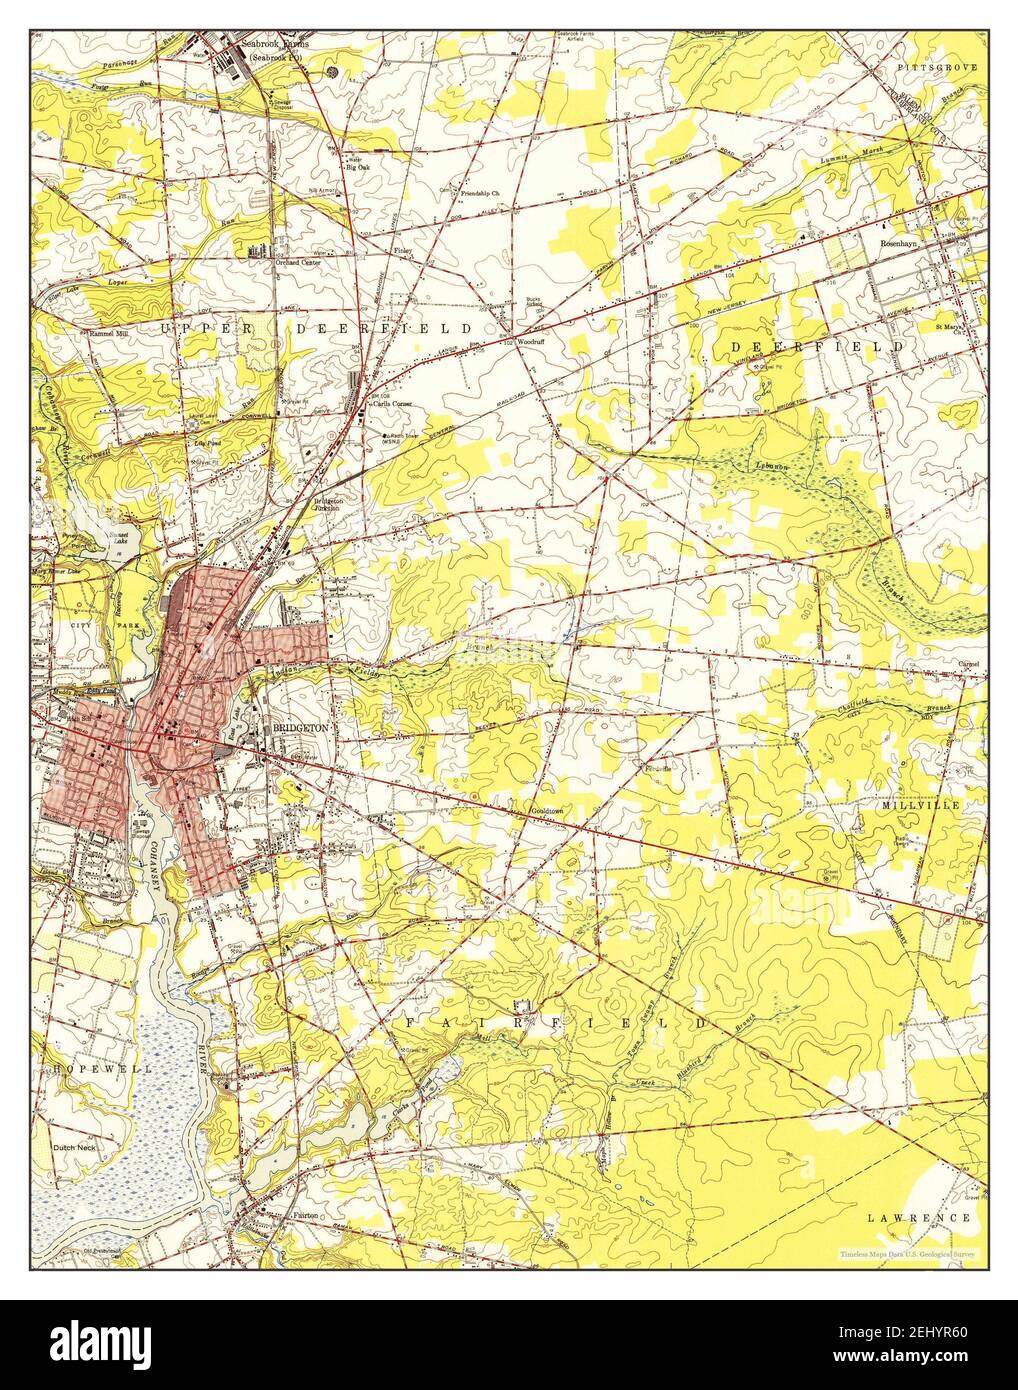 Bridgeton New Jersey Map 1953 124000 United States Of America By Timeless Maps Data Us 4876